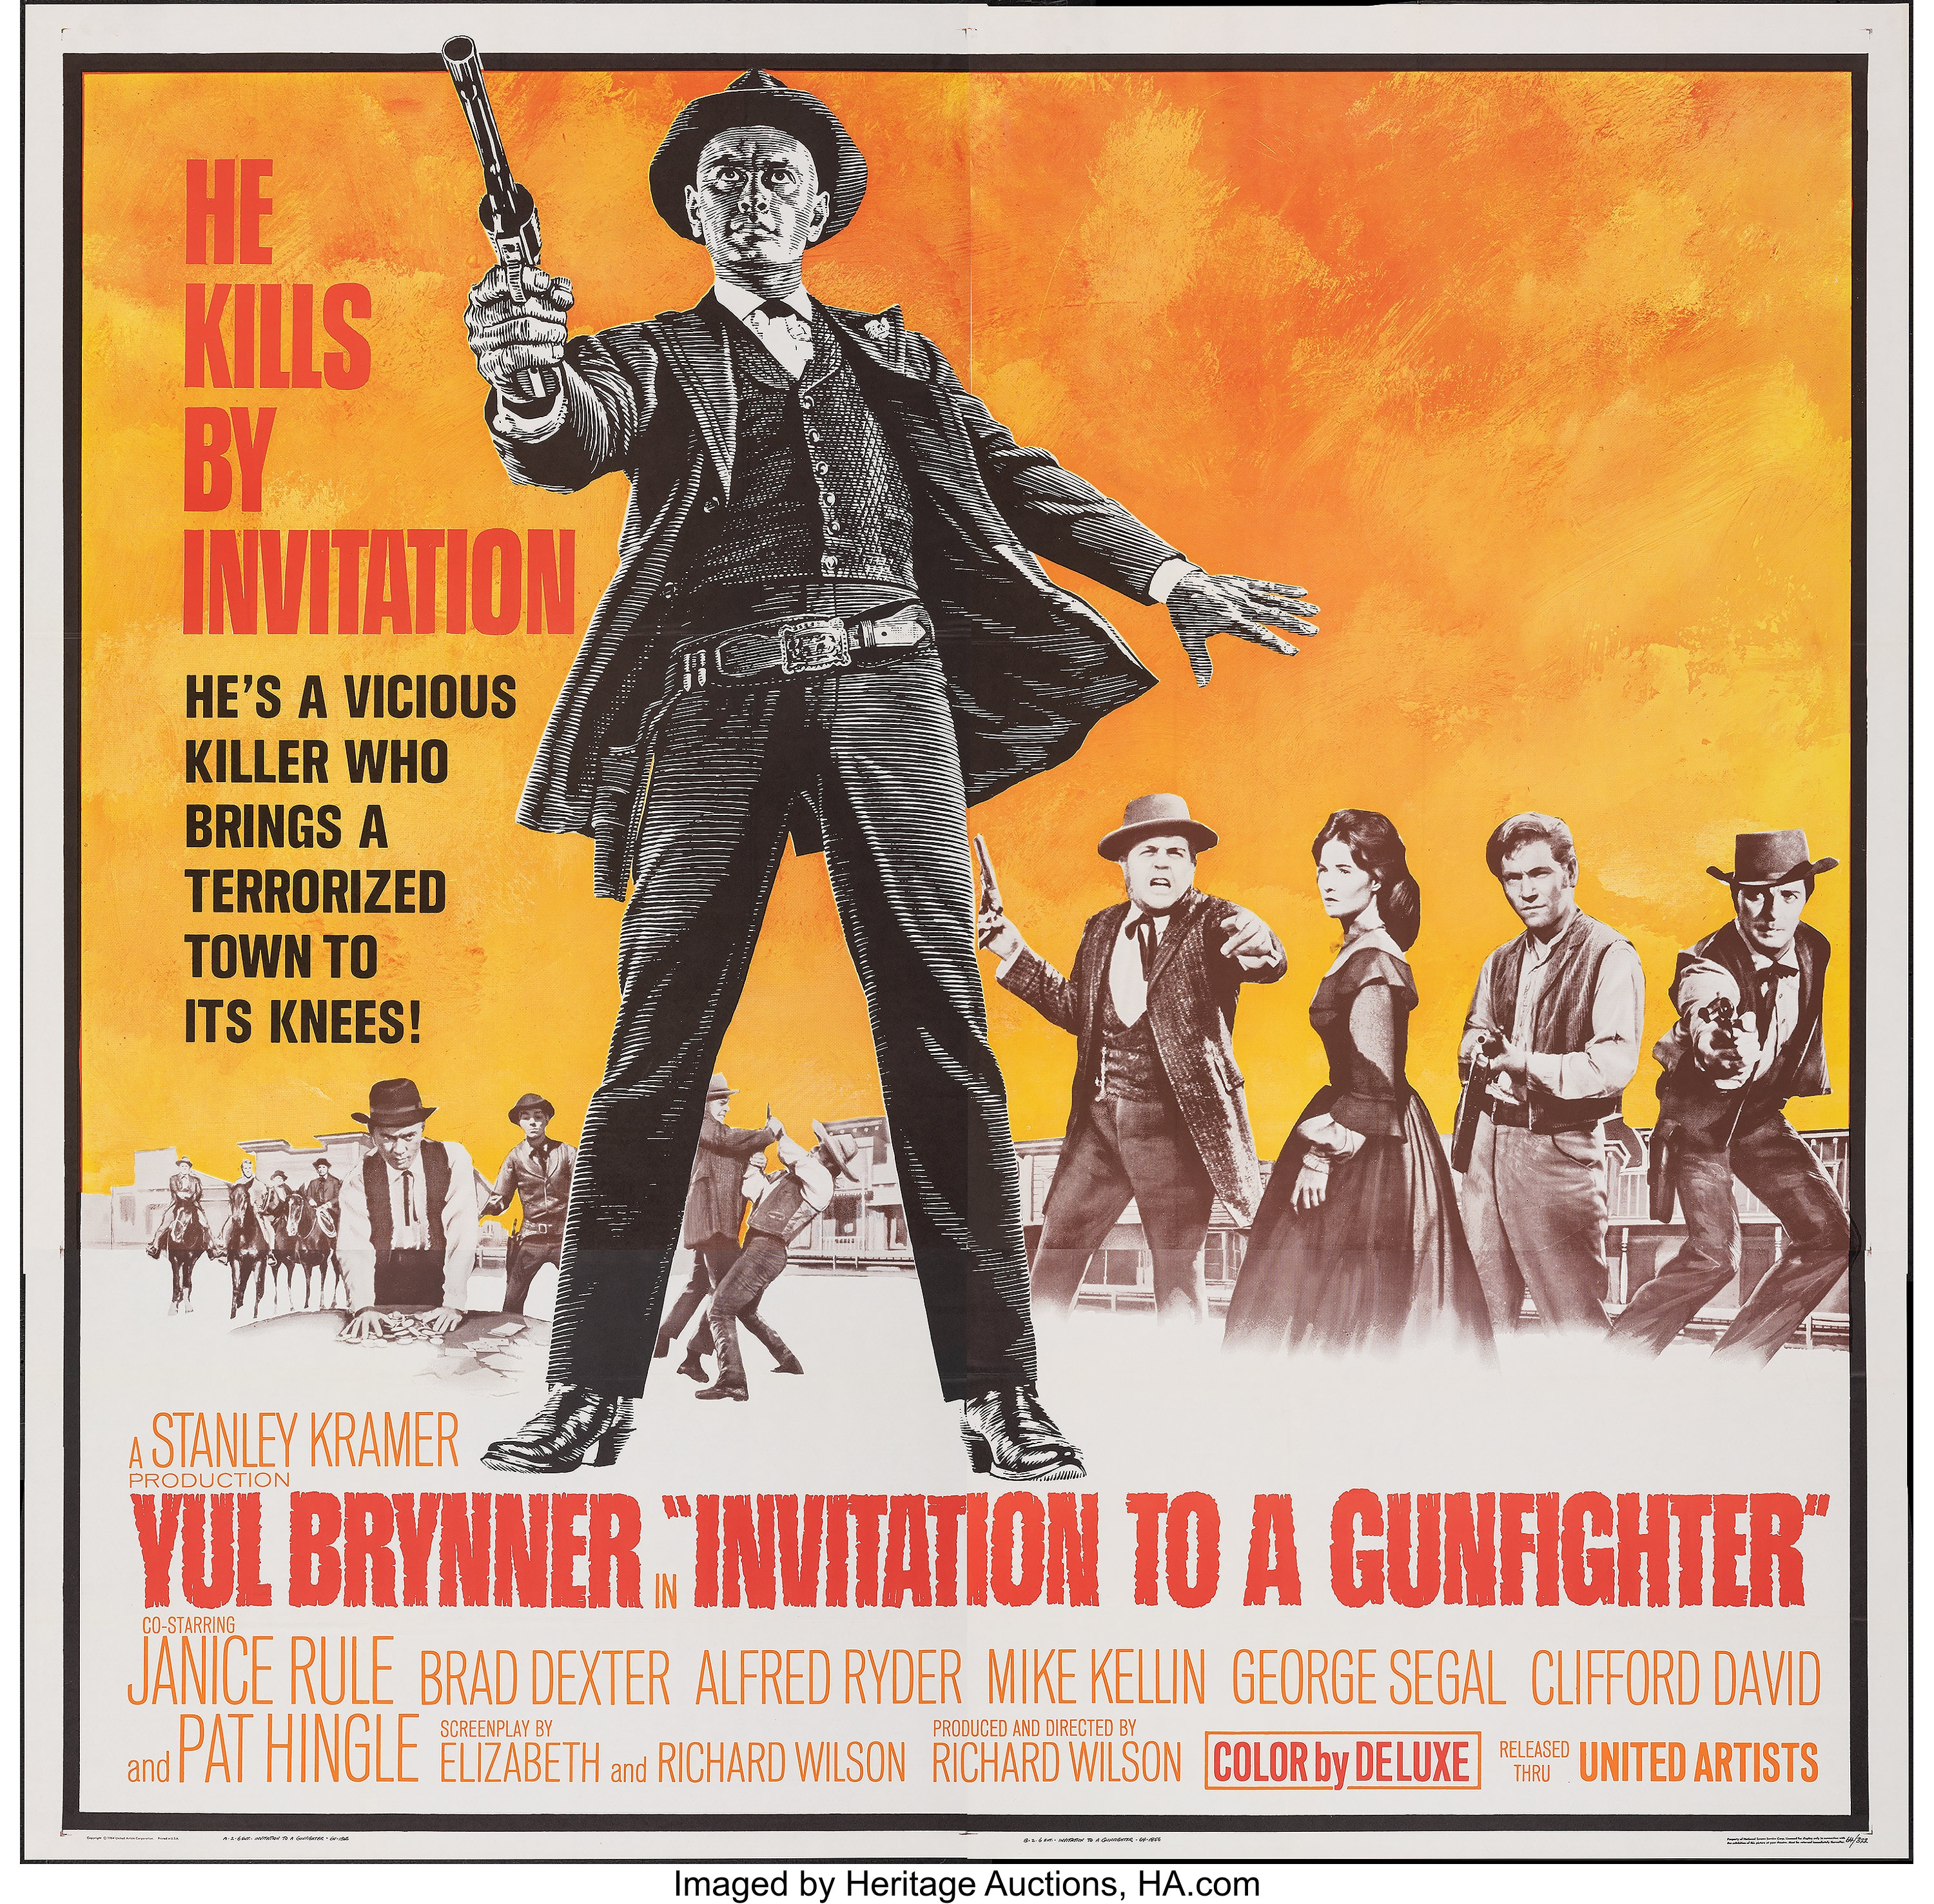 Invitation to a Gunfighter (1964) - gunfighter or con artist? - item by IMDb